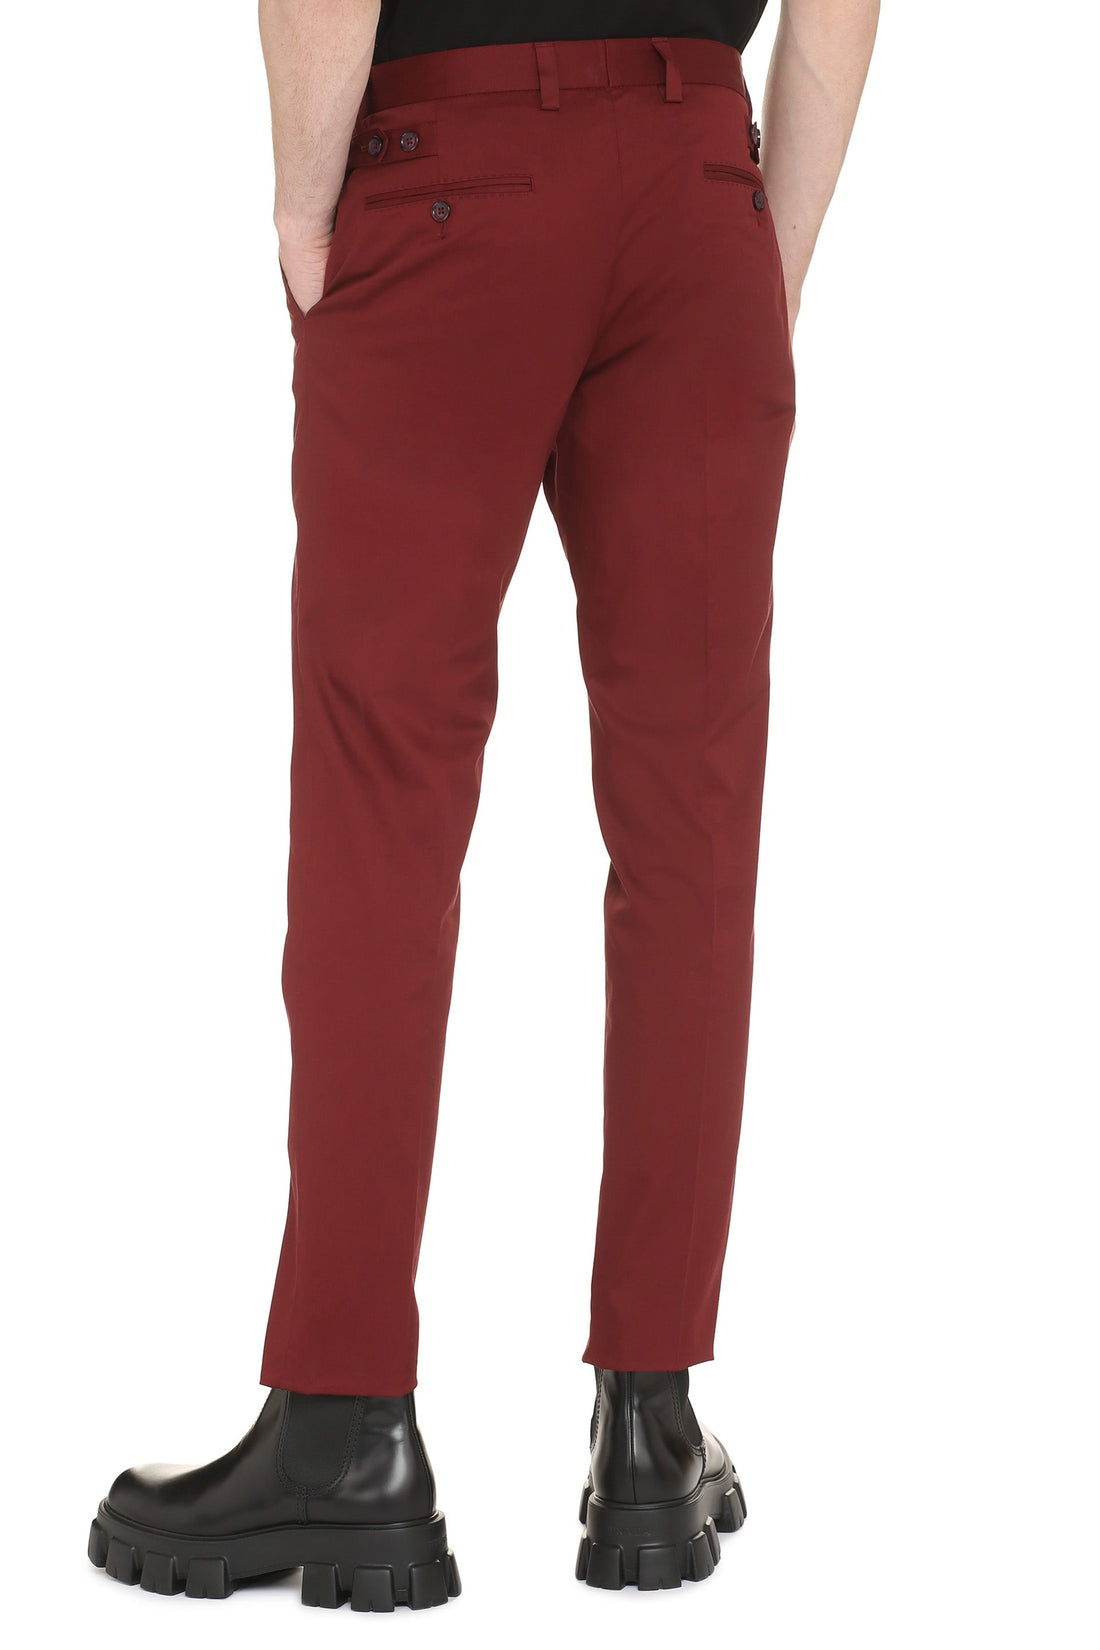 Dolce & Gabbana-OUTLET-SALE-Cotton tailored trousers-ARCHIVIST